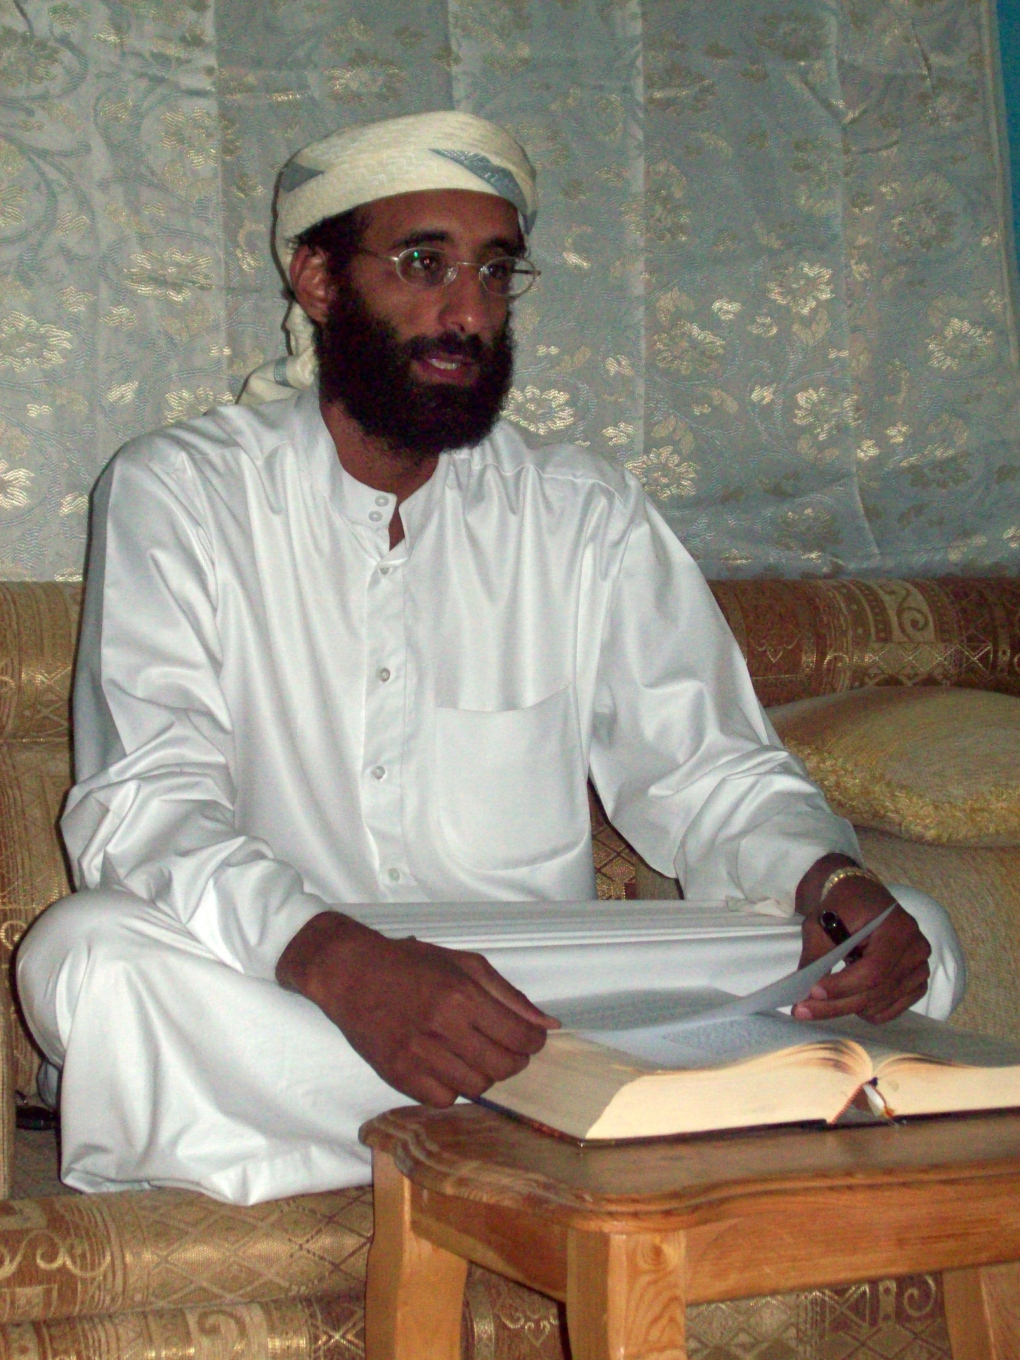 Anwar al-Awlaki Targeting Americans